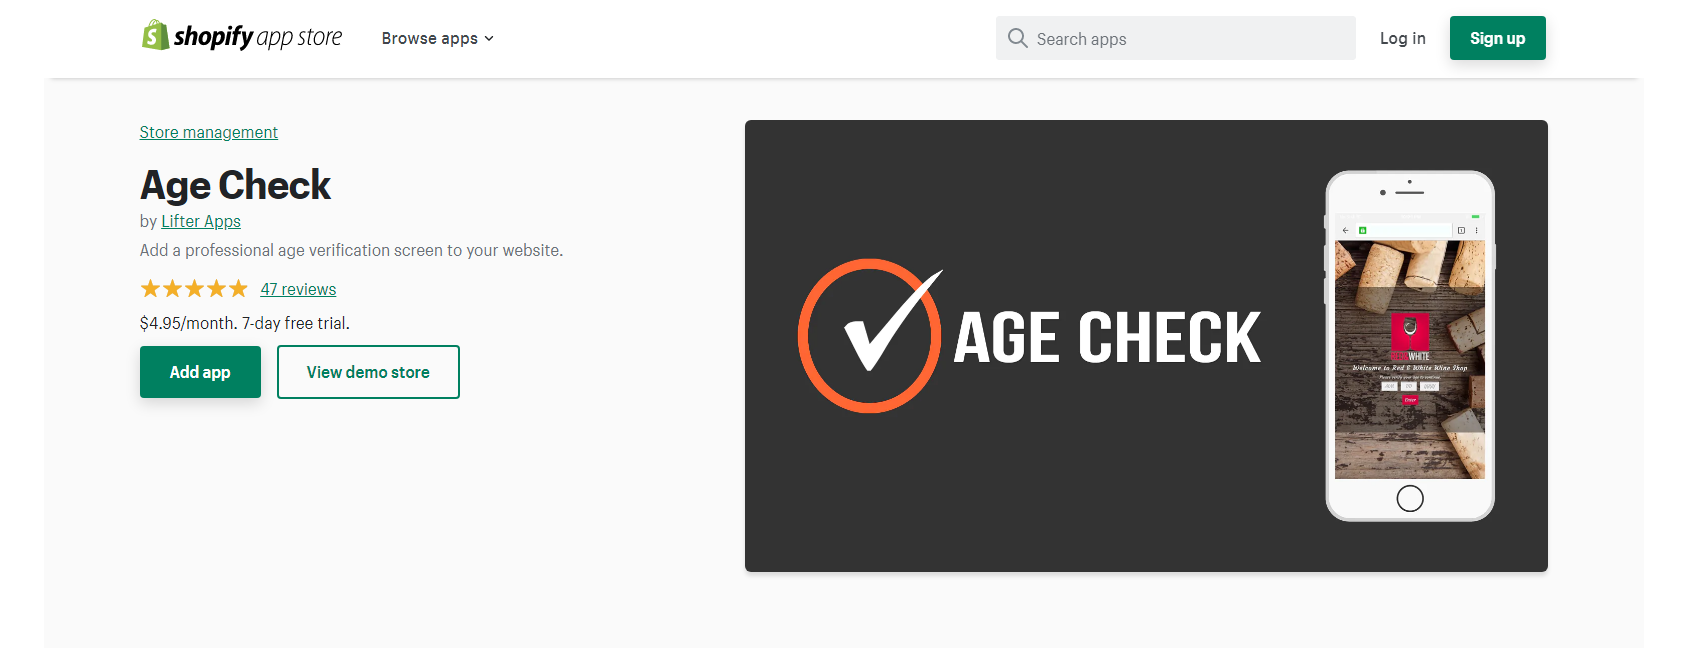 Age Check - Shopify age verification